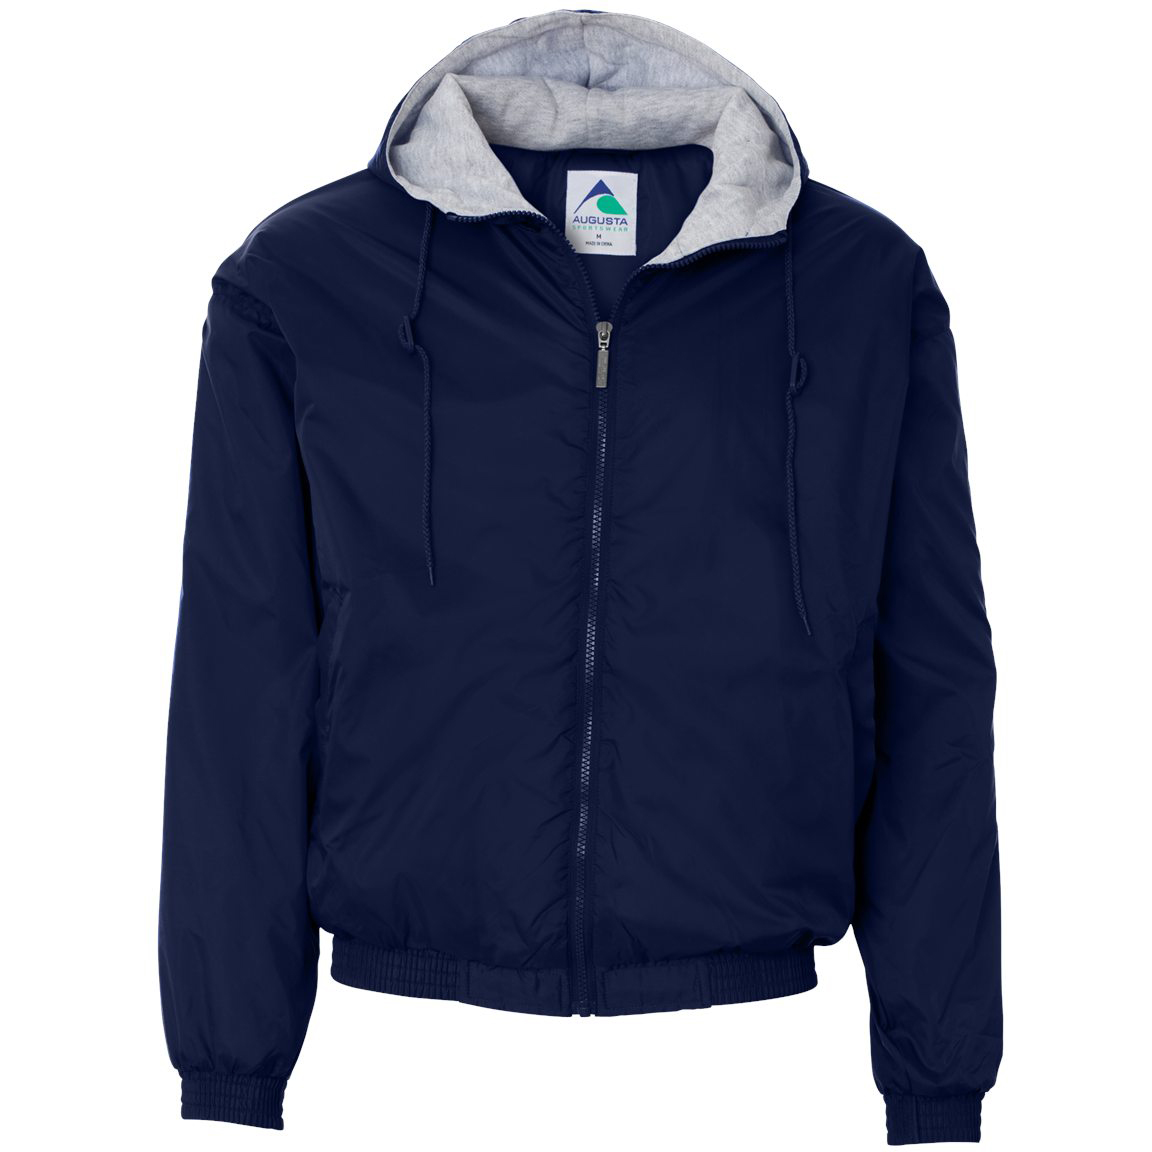 Fleece Lined Jacket With Hood Flash Sales, 51% OFF | www 